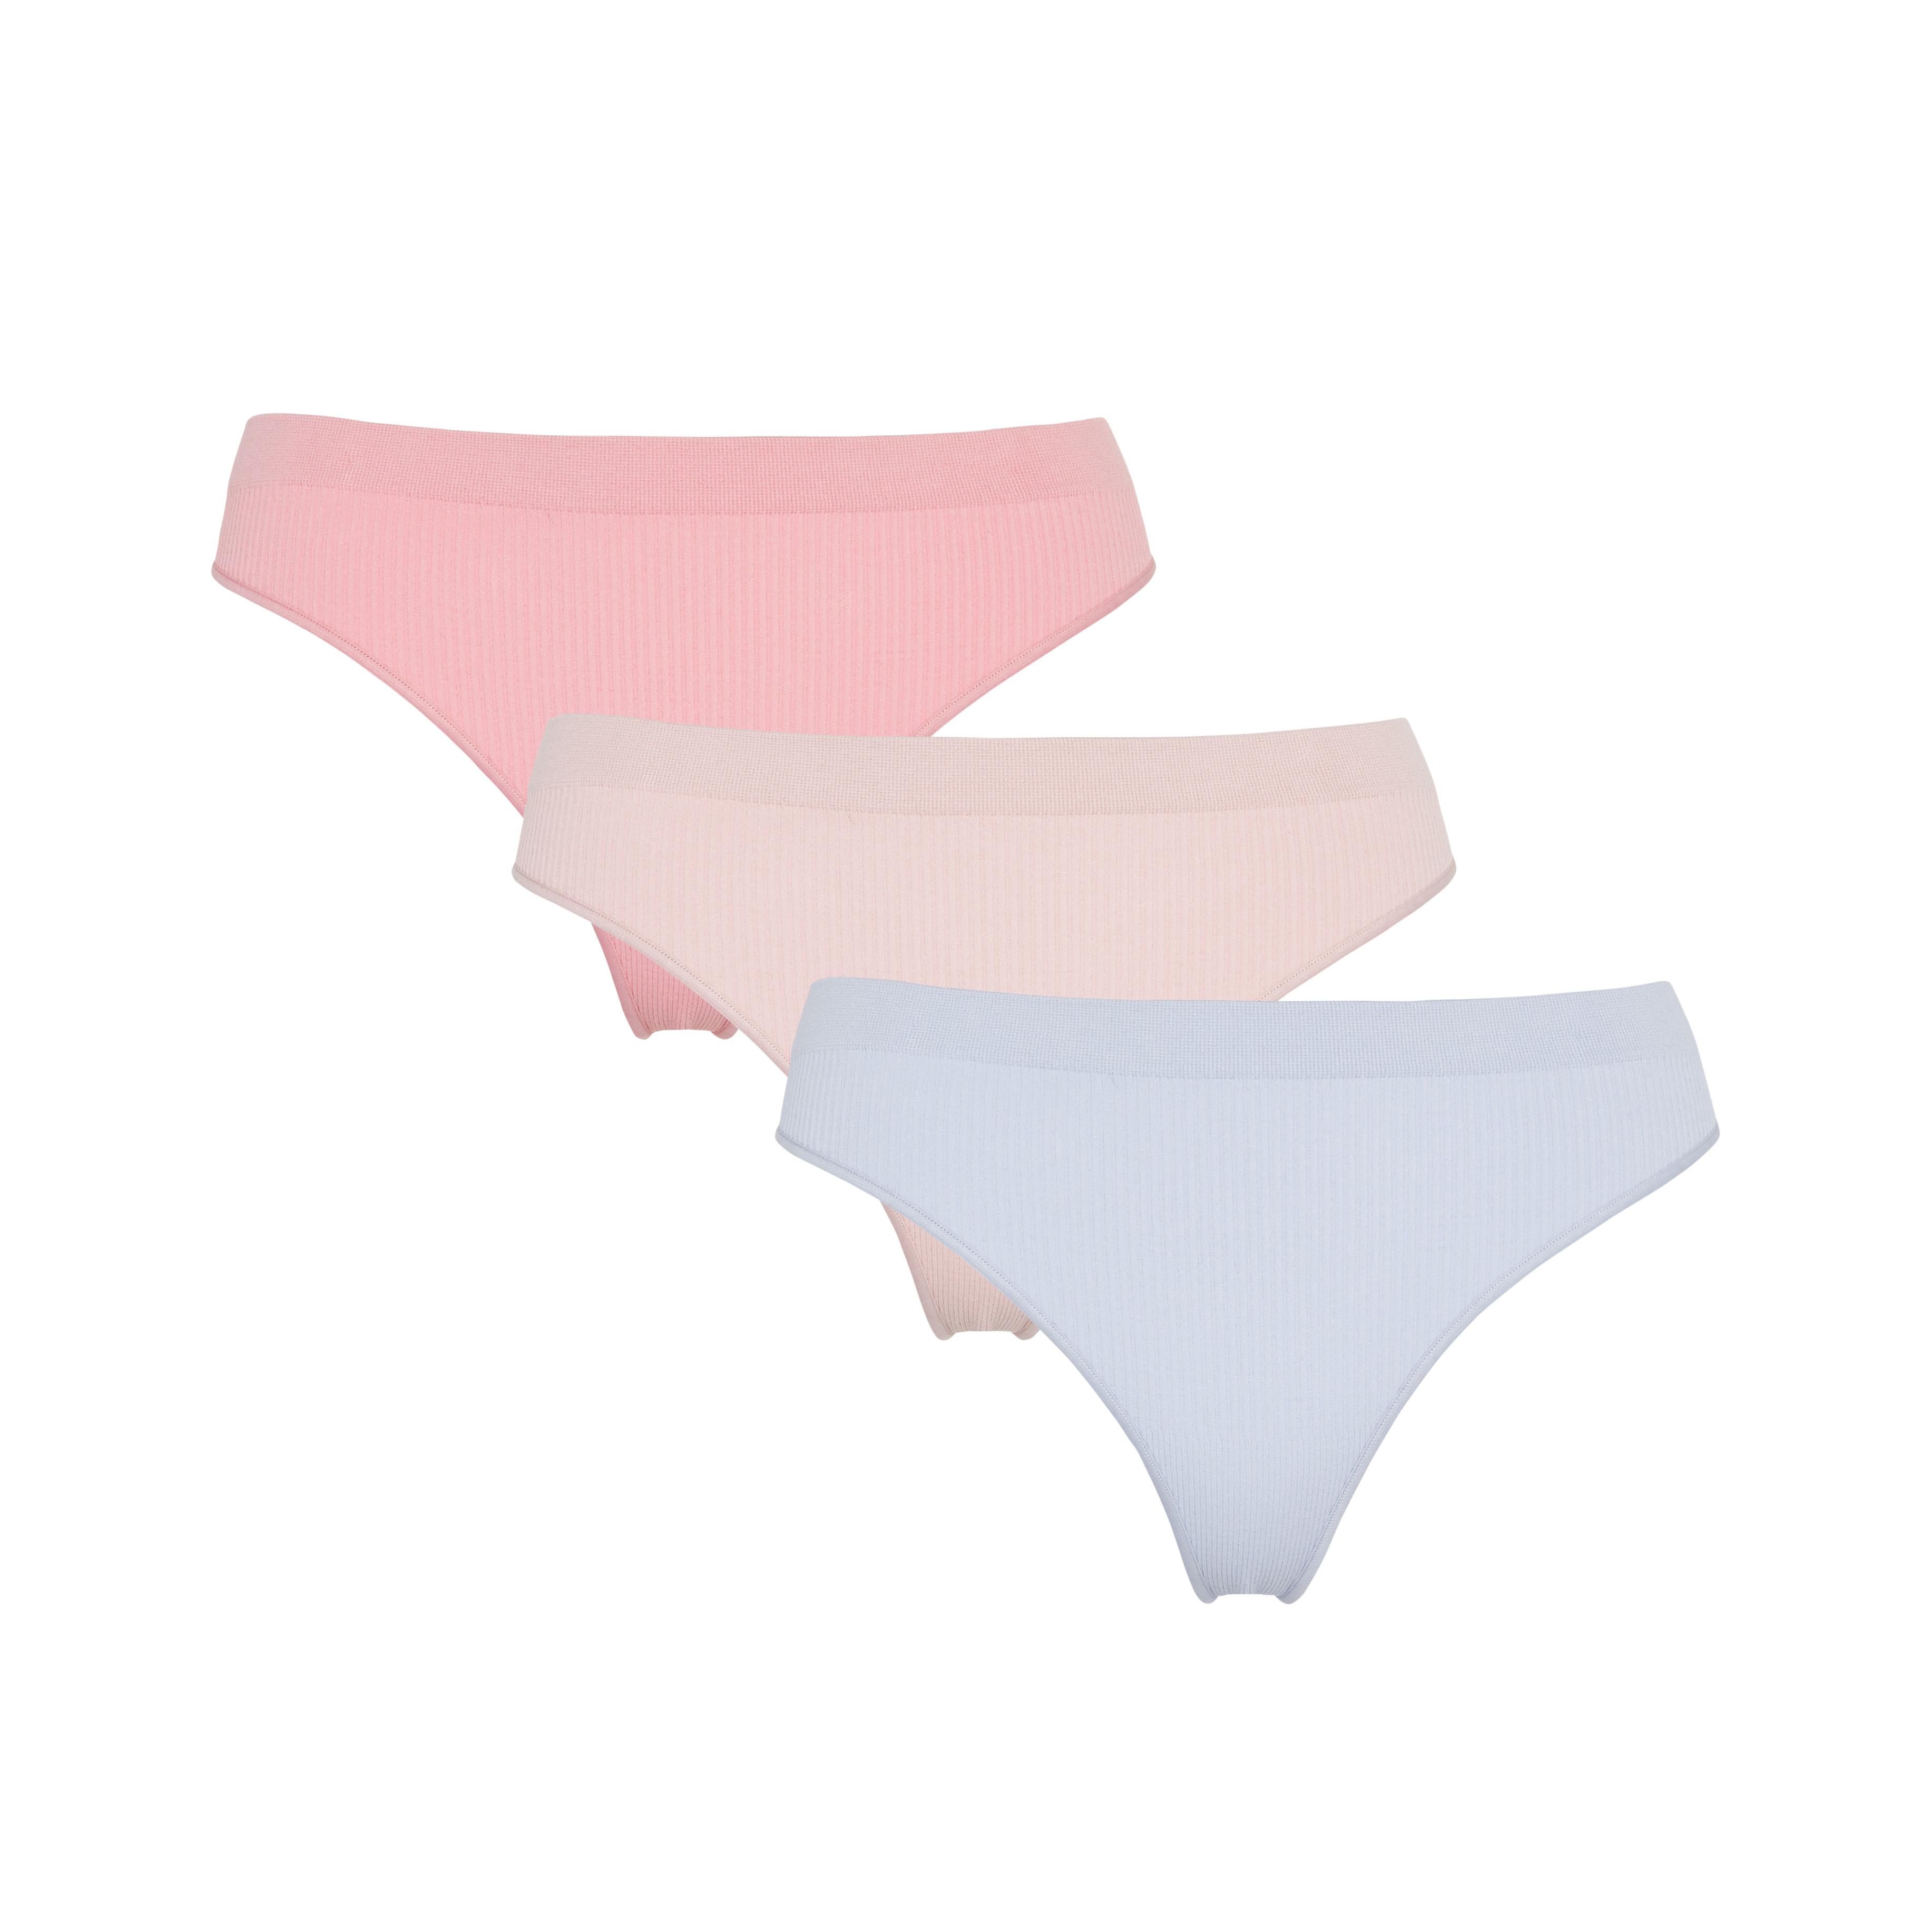 Primark Ladies 5 Pack Microfibre Lace Waist Thong Underwear Brief Knickers